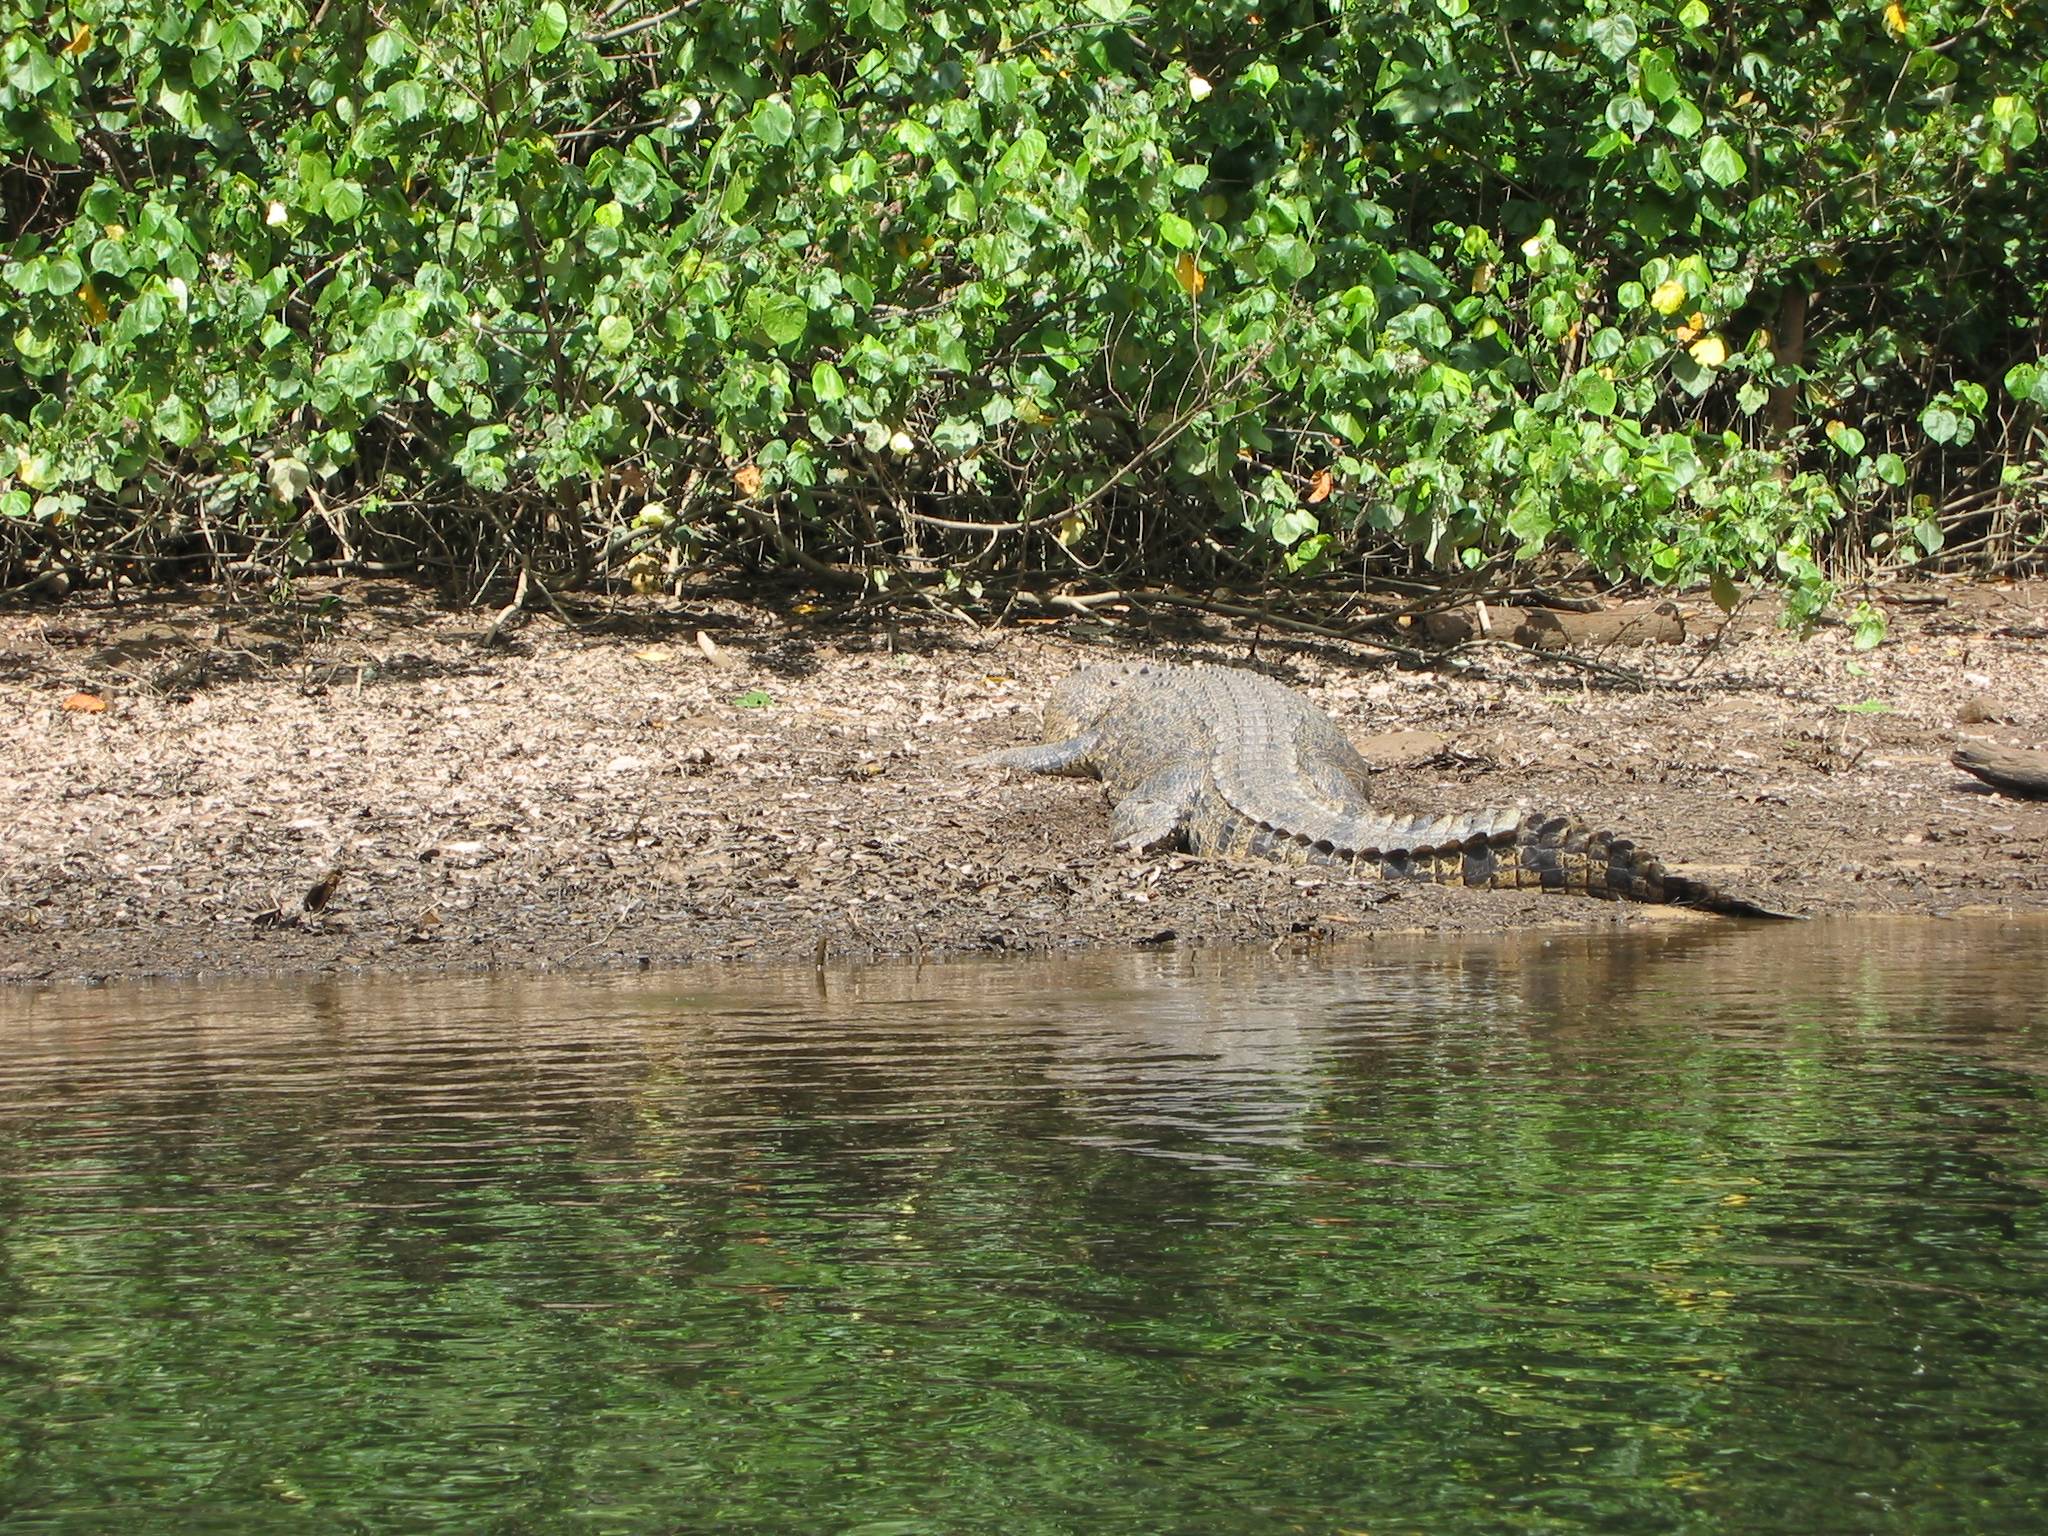 Large male Crocodile basking, wild hibiscus growing along bank.